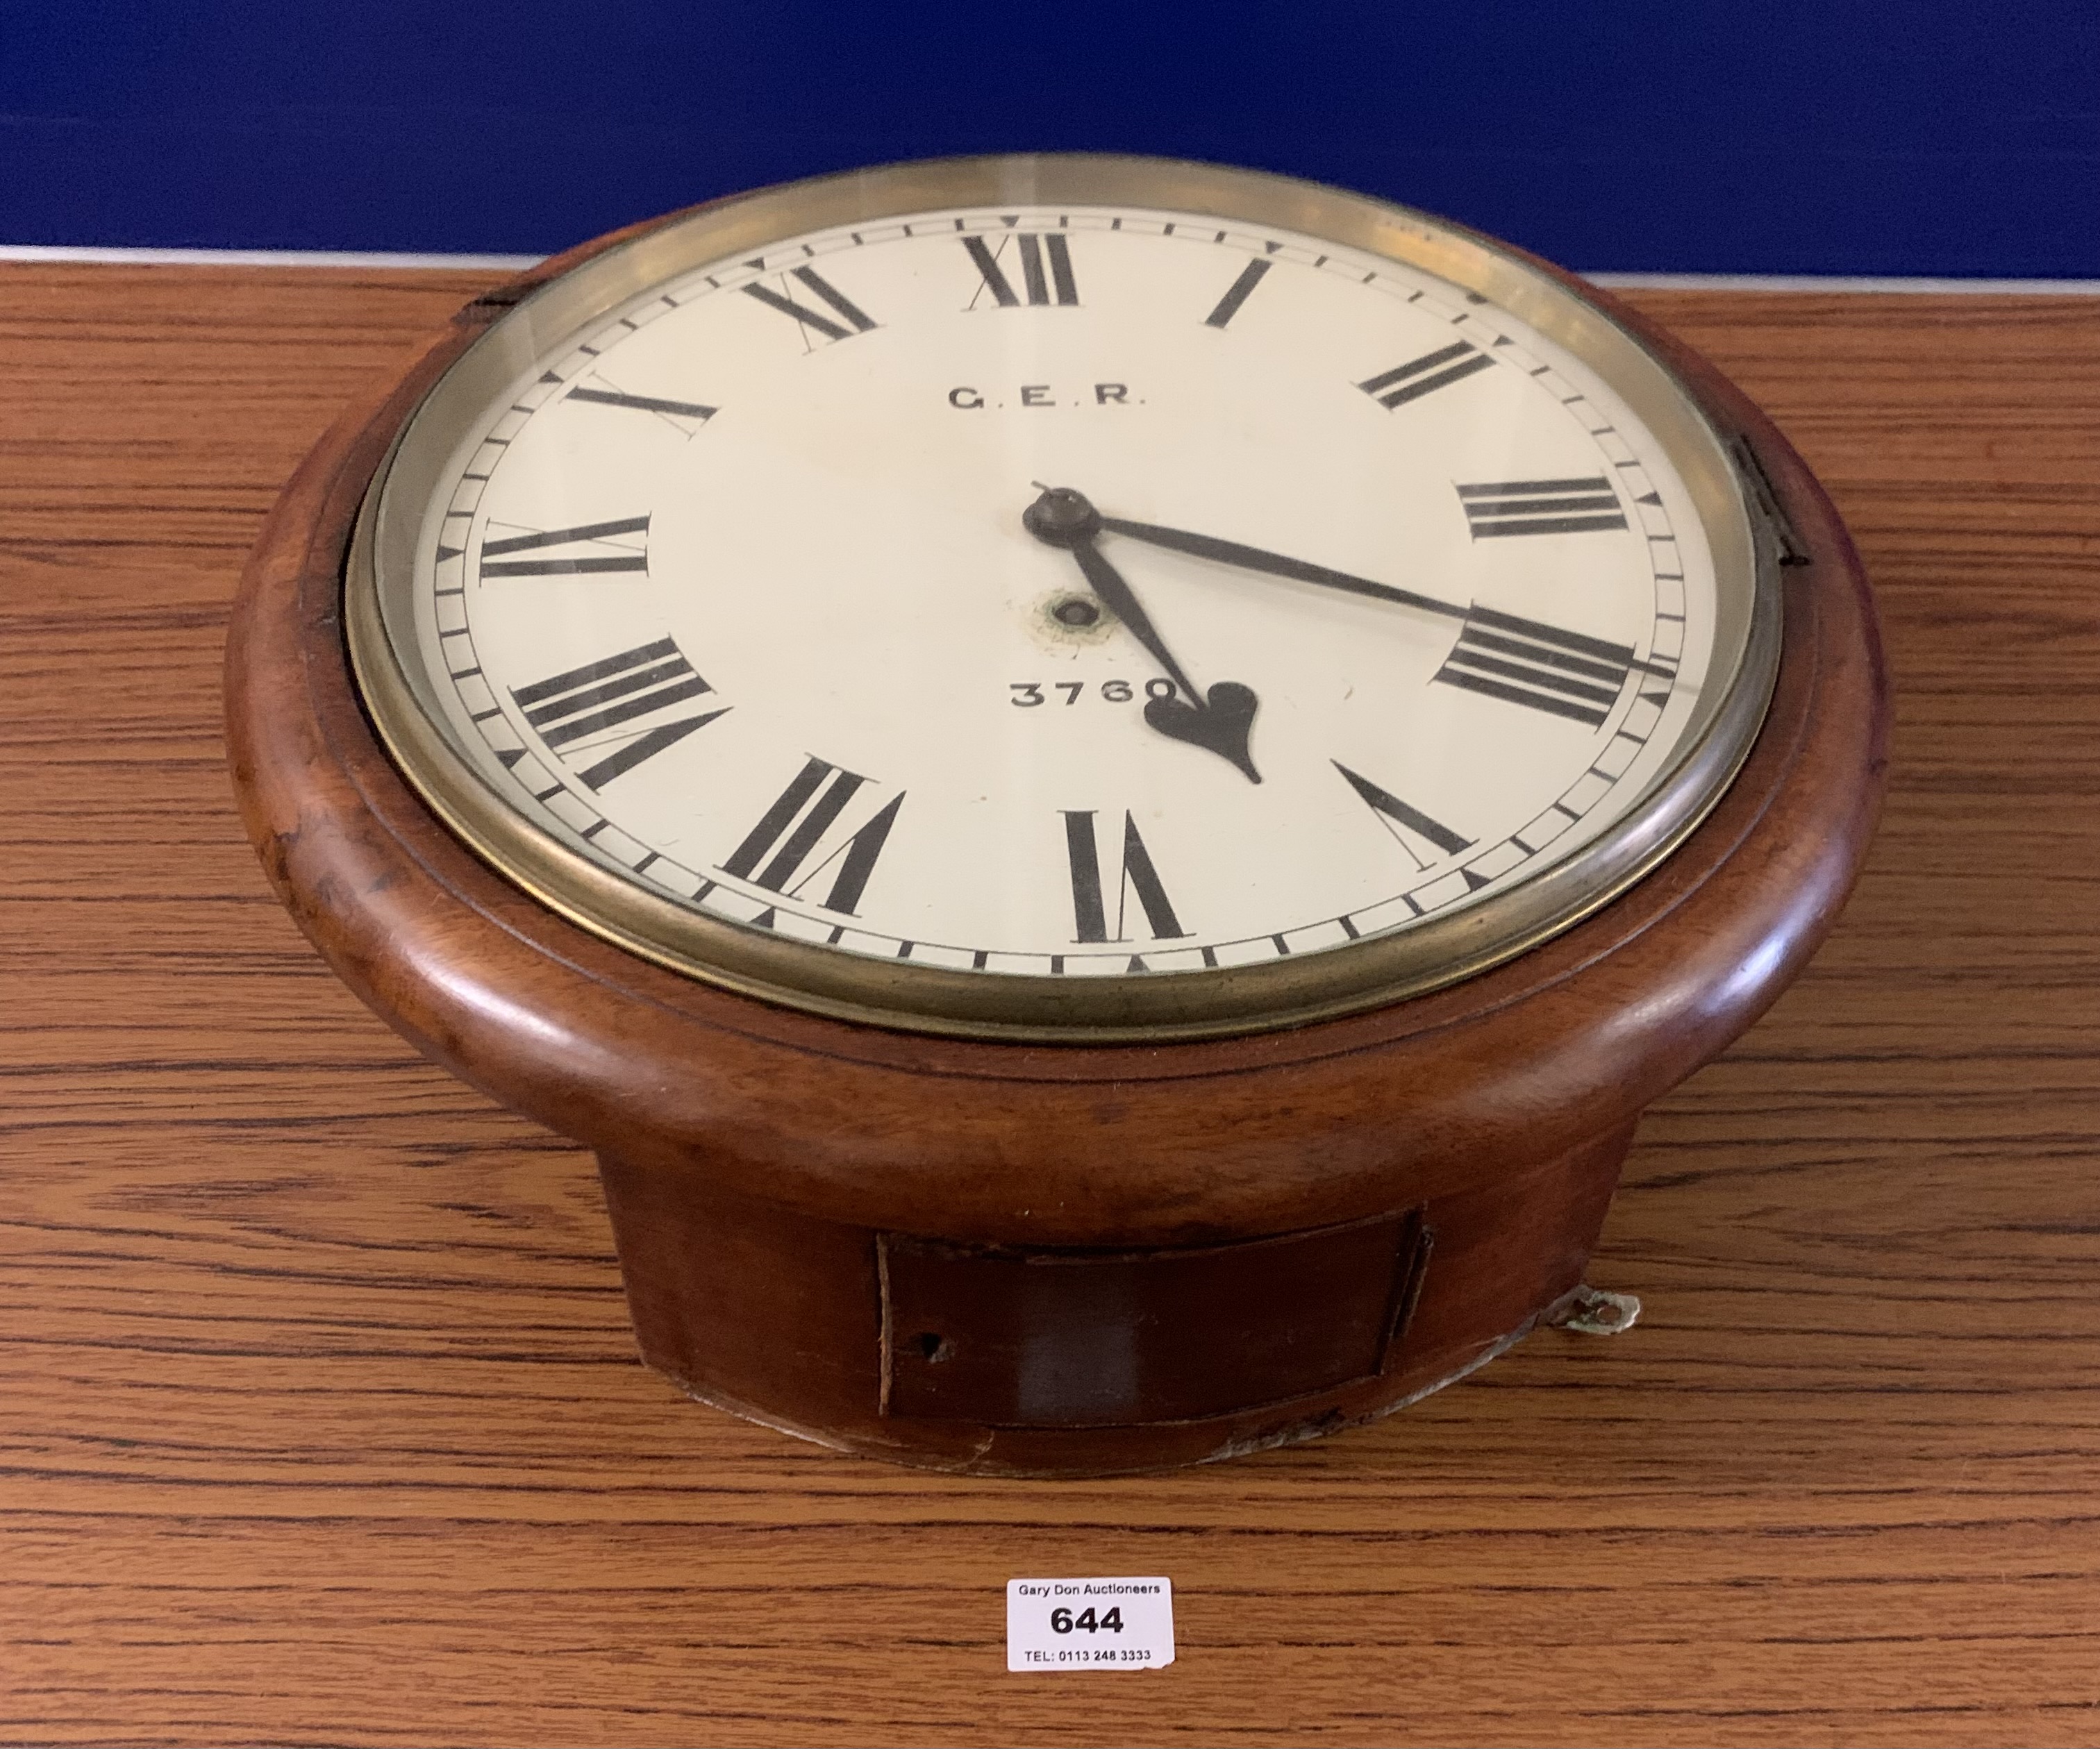 Round G.E.R. 3760 school/station clock with pendulum, 15”diameter - Image 2 of 8